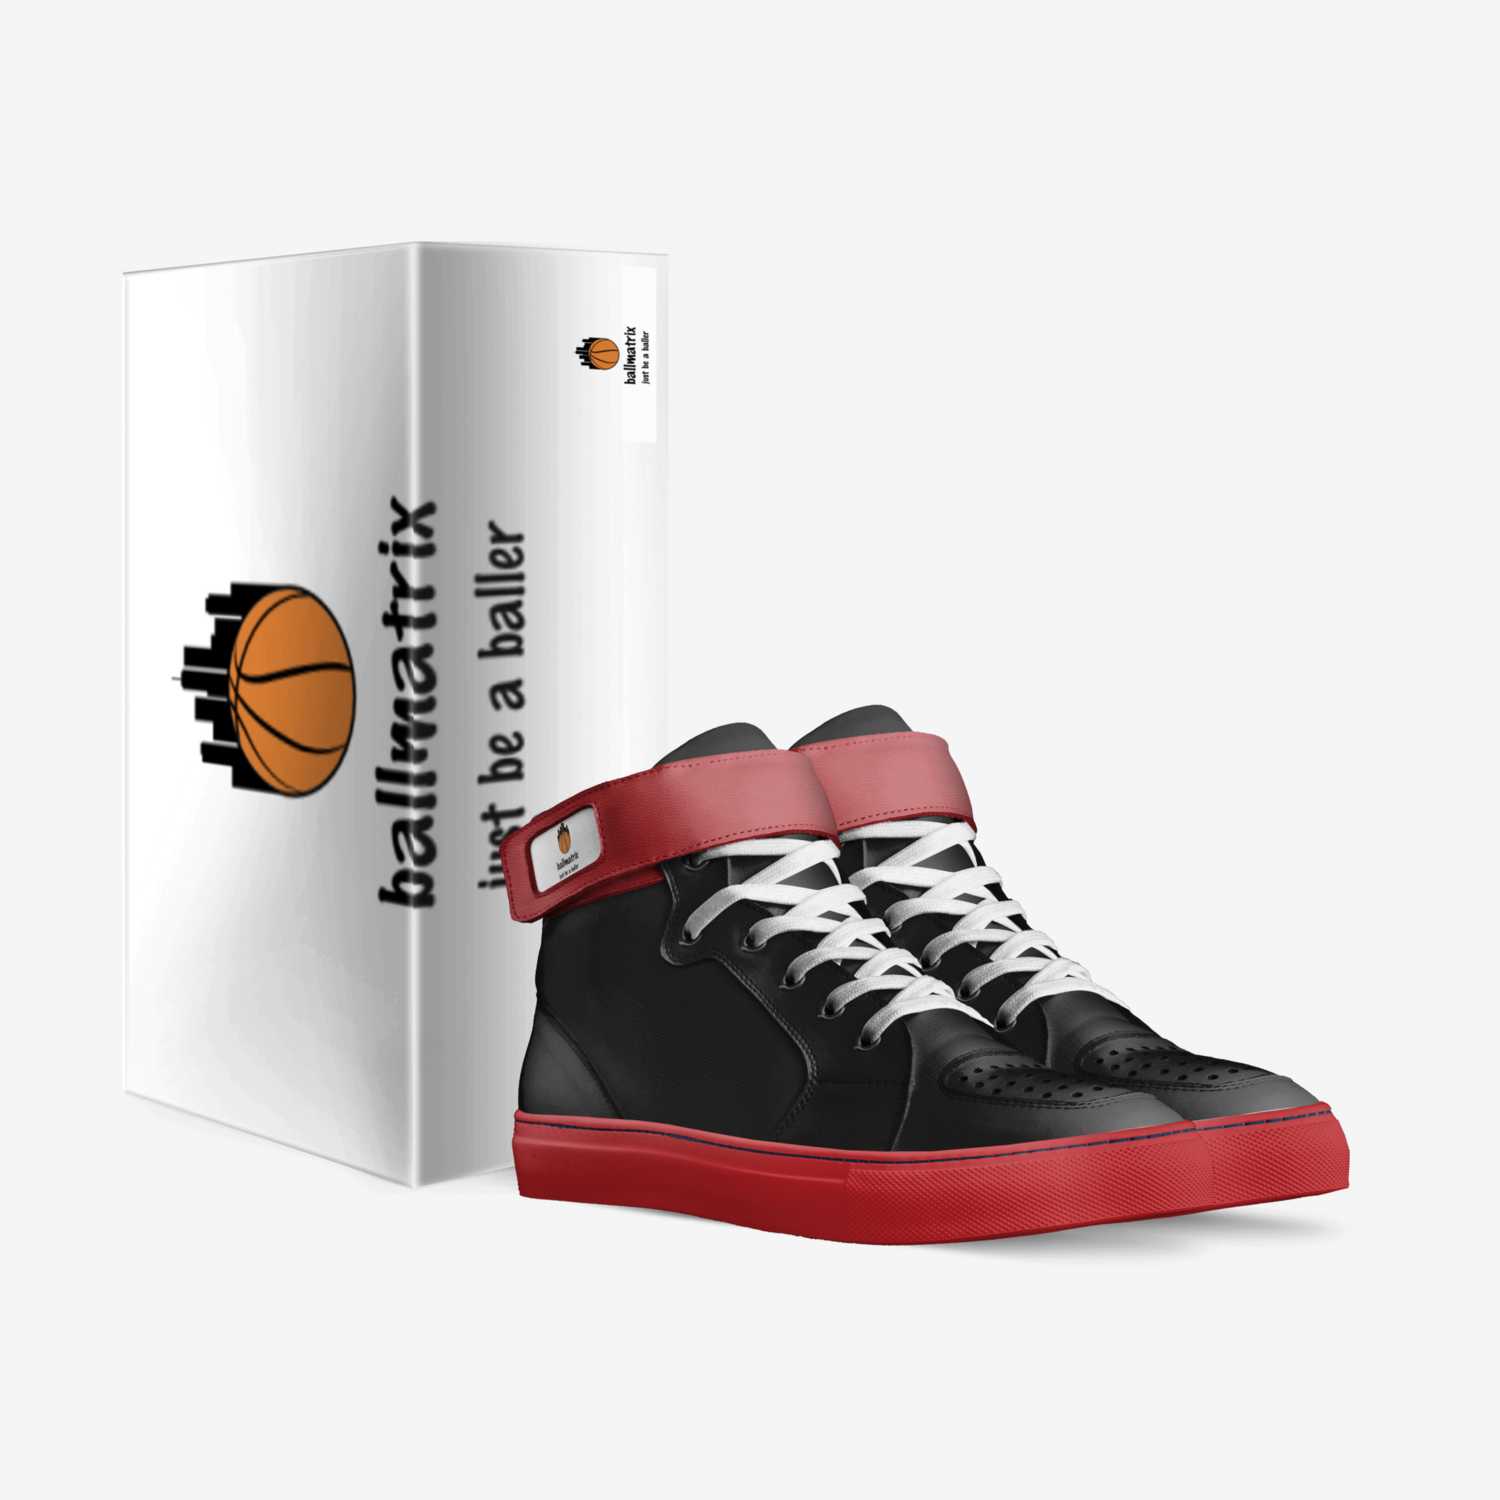 ballmatrix 1's custom made in Italy shoes by John | Box view